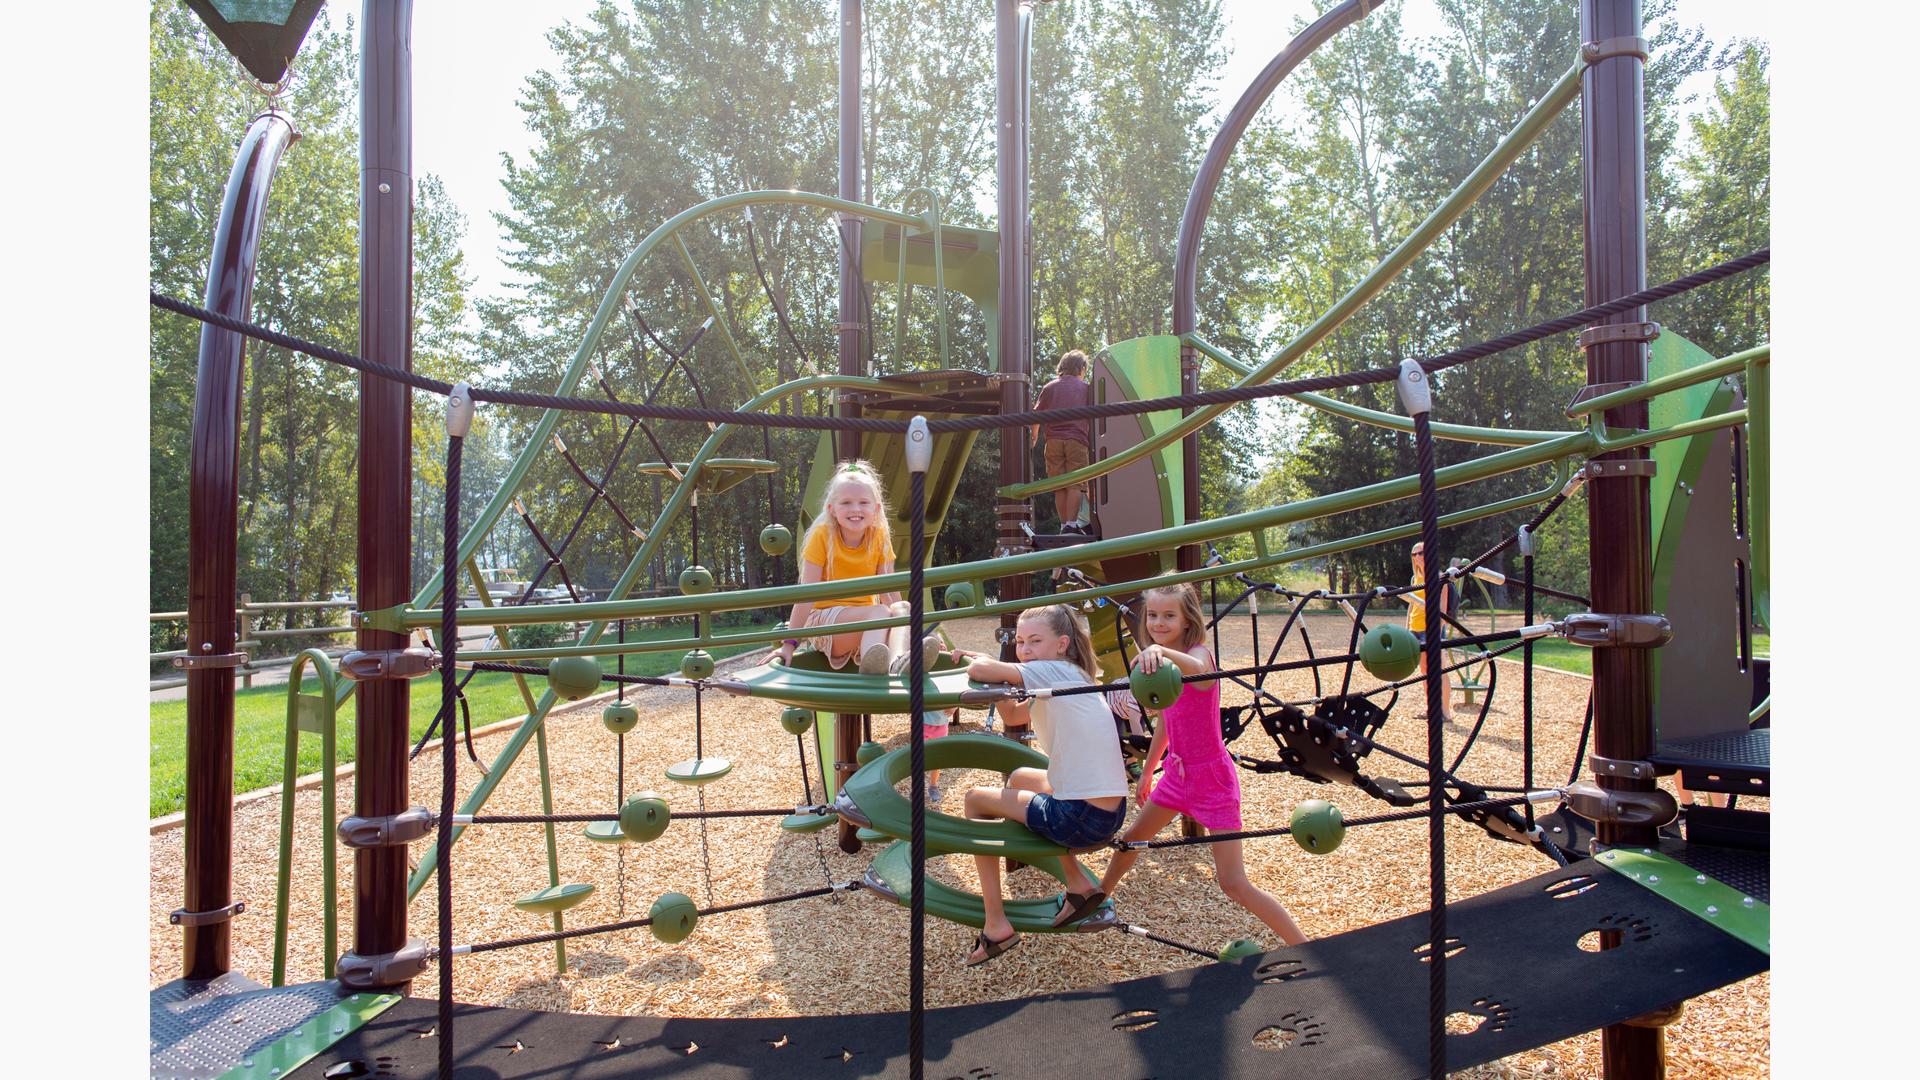 Girls sitting and smiling on playground